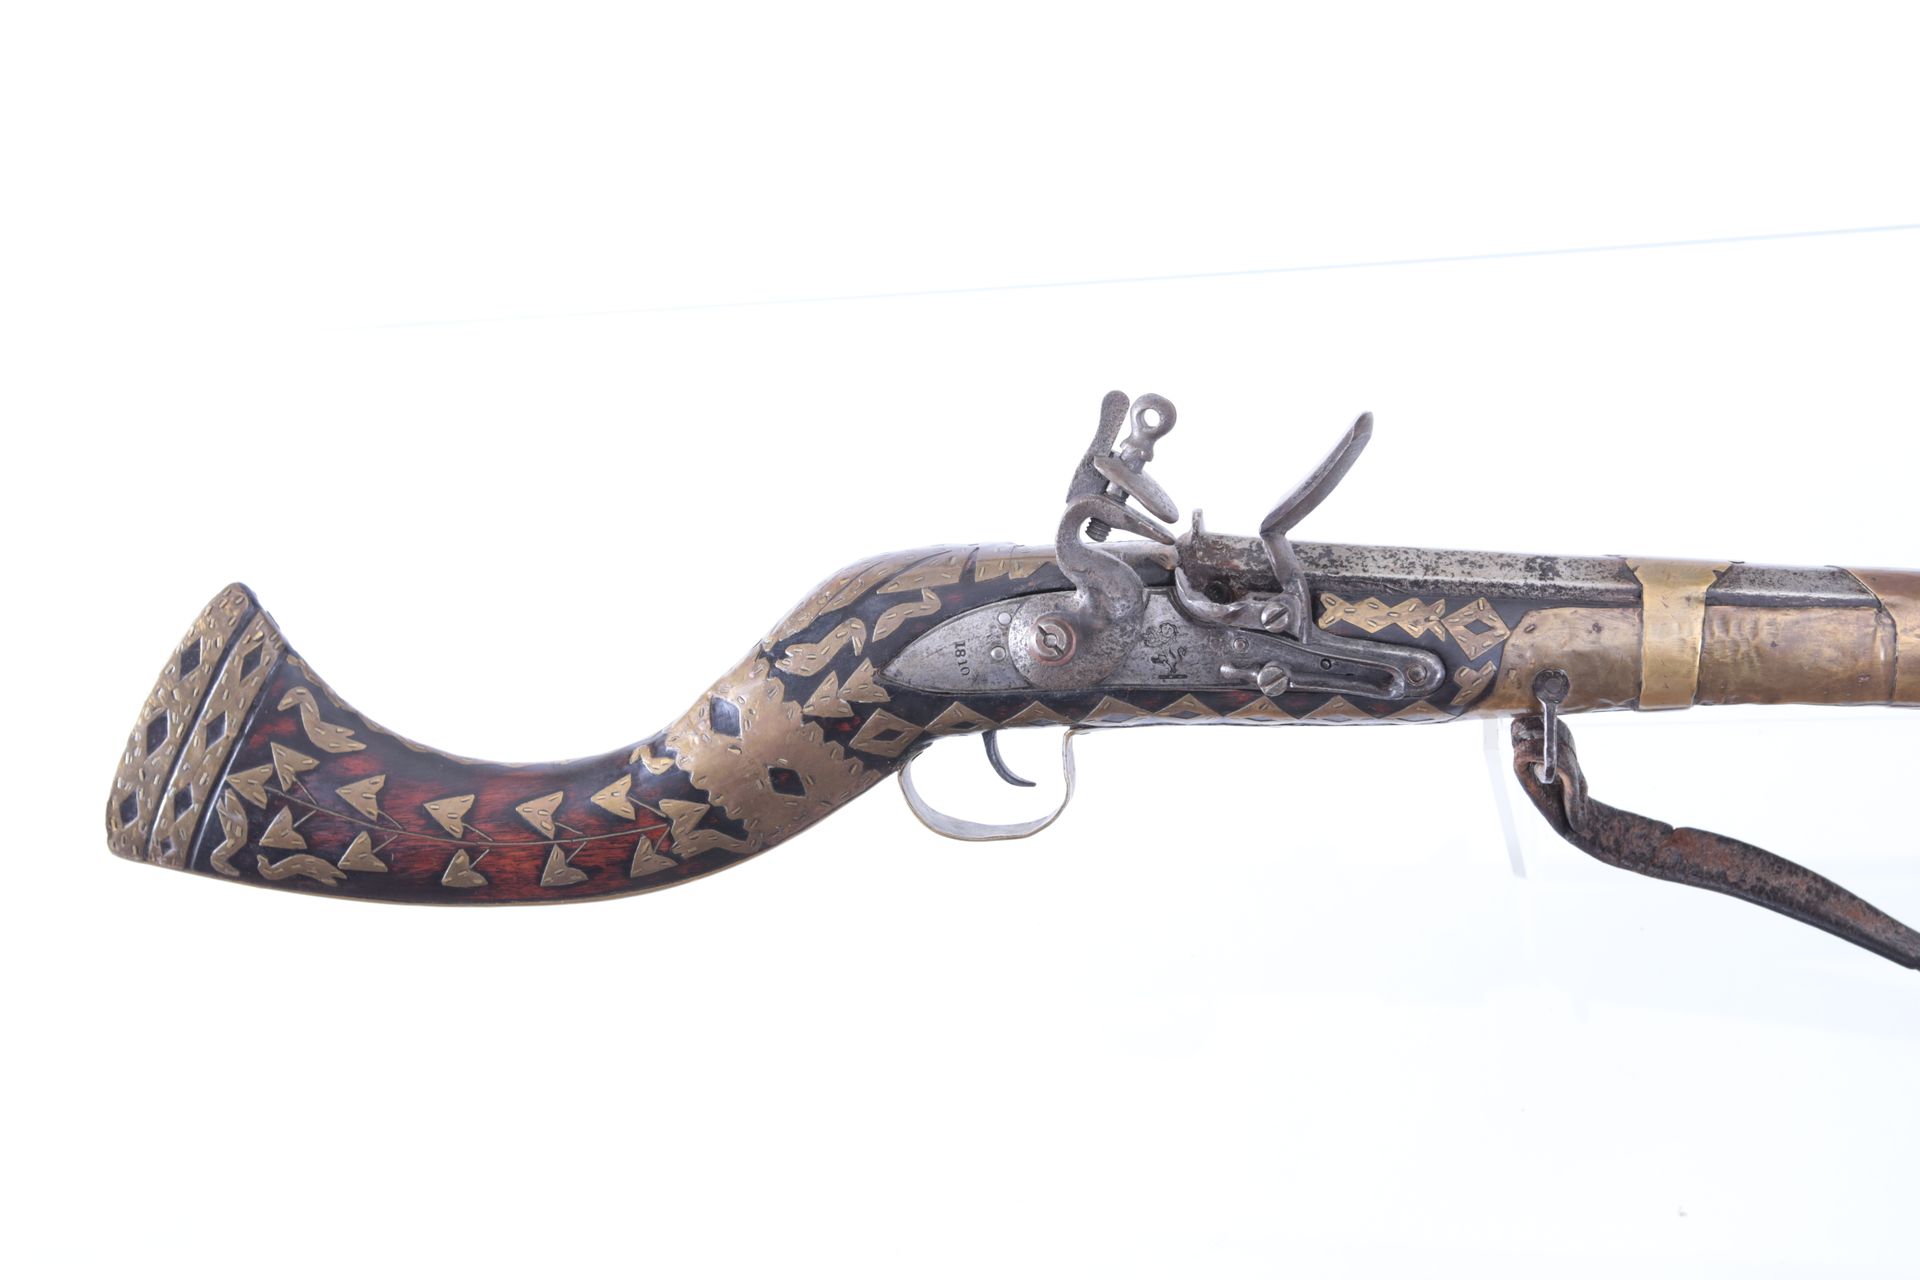 An Afghan Jezail flintlock Rifle, ca. 1850 Fucile afgano a pietra focaia Jezail,&hellip;